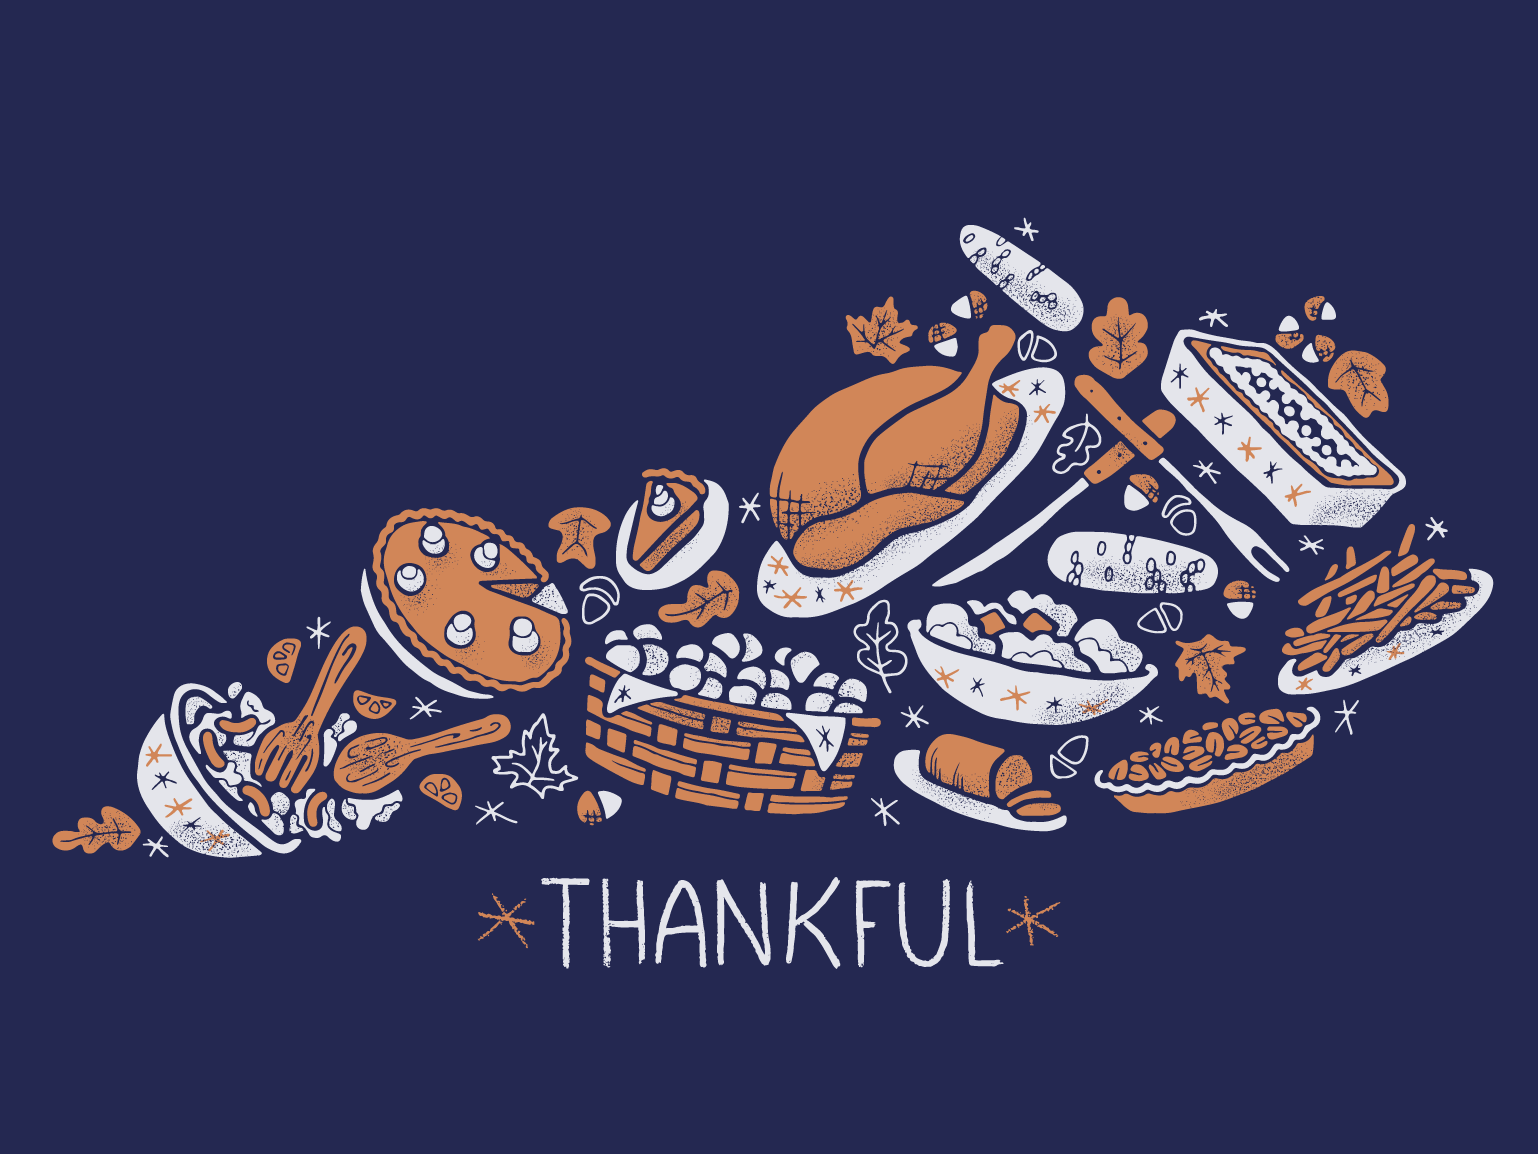 Thanksgiving 2021 wallpaper